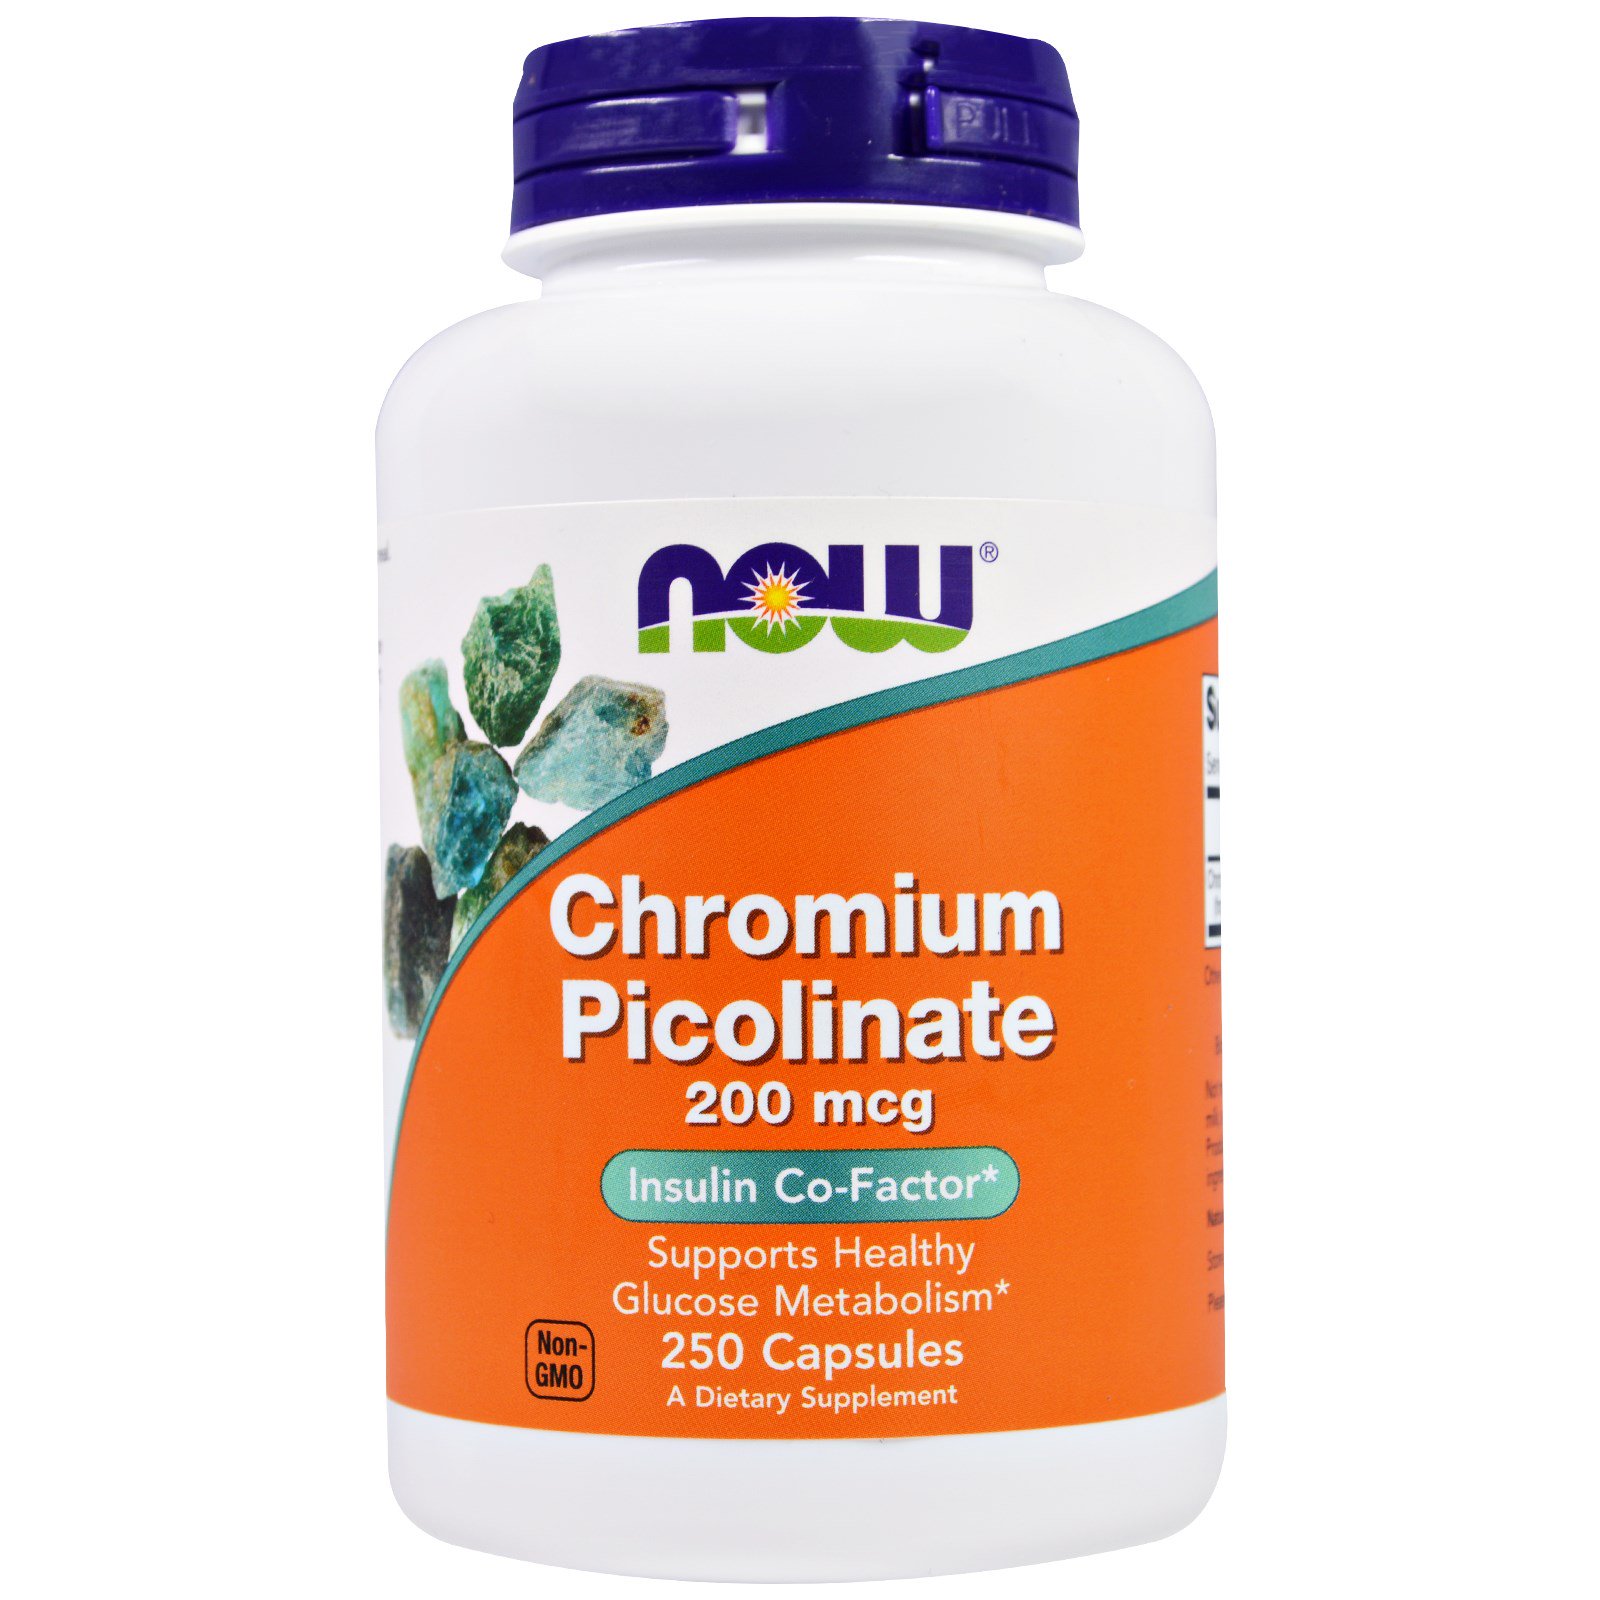 chromium supplements benefits